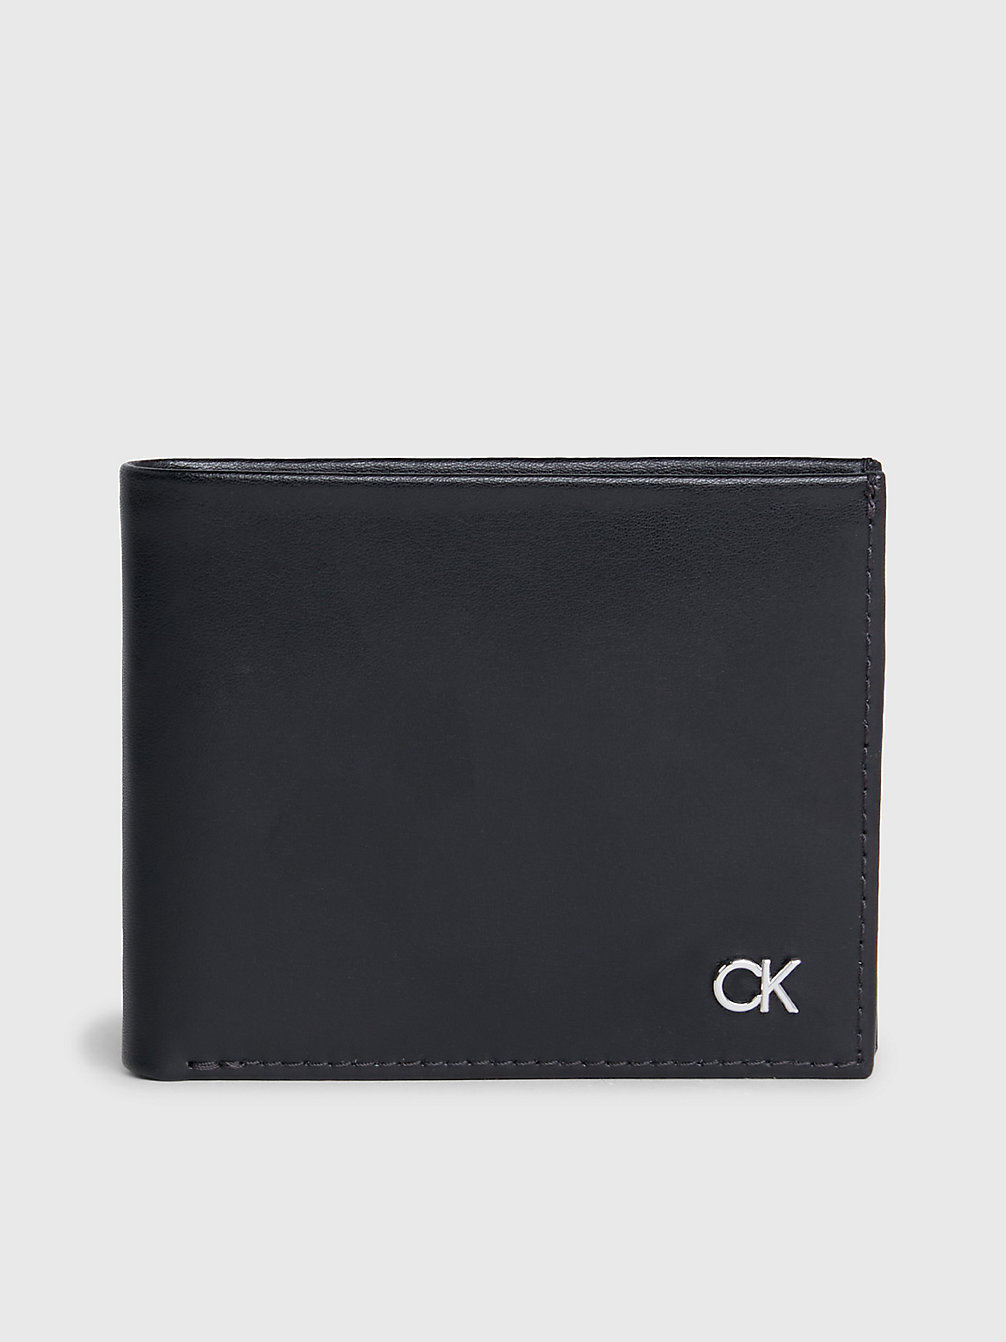 CK BLACK Leather Rfid Slimfold Wallet undefined Men Calvin Klein